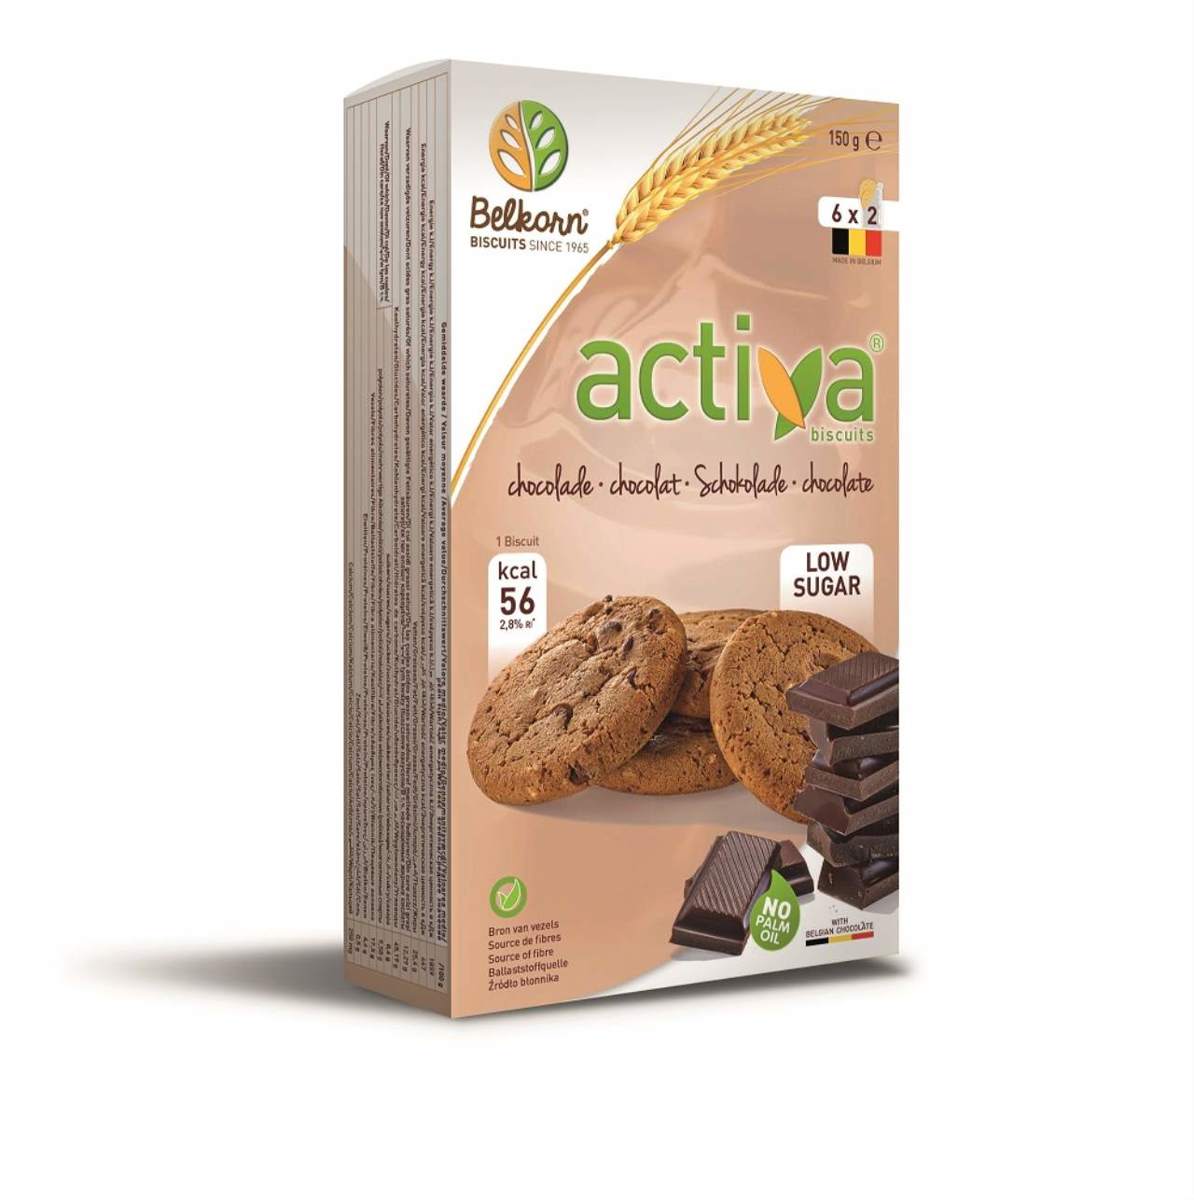 Belkorn - Activa biscuits au chocolat (pauvre en sucre) - 6 x 2 pièces (150 g)